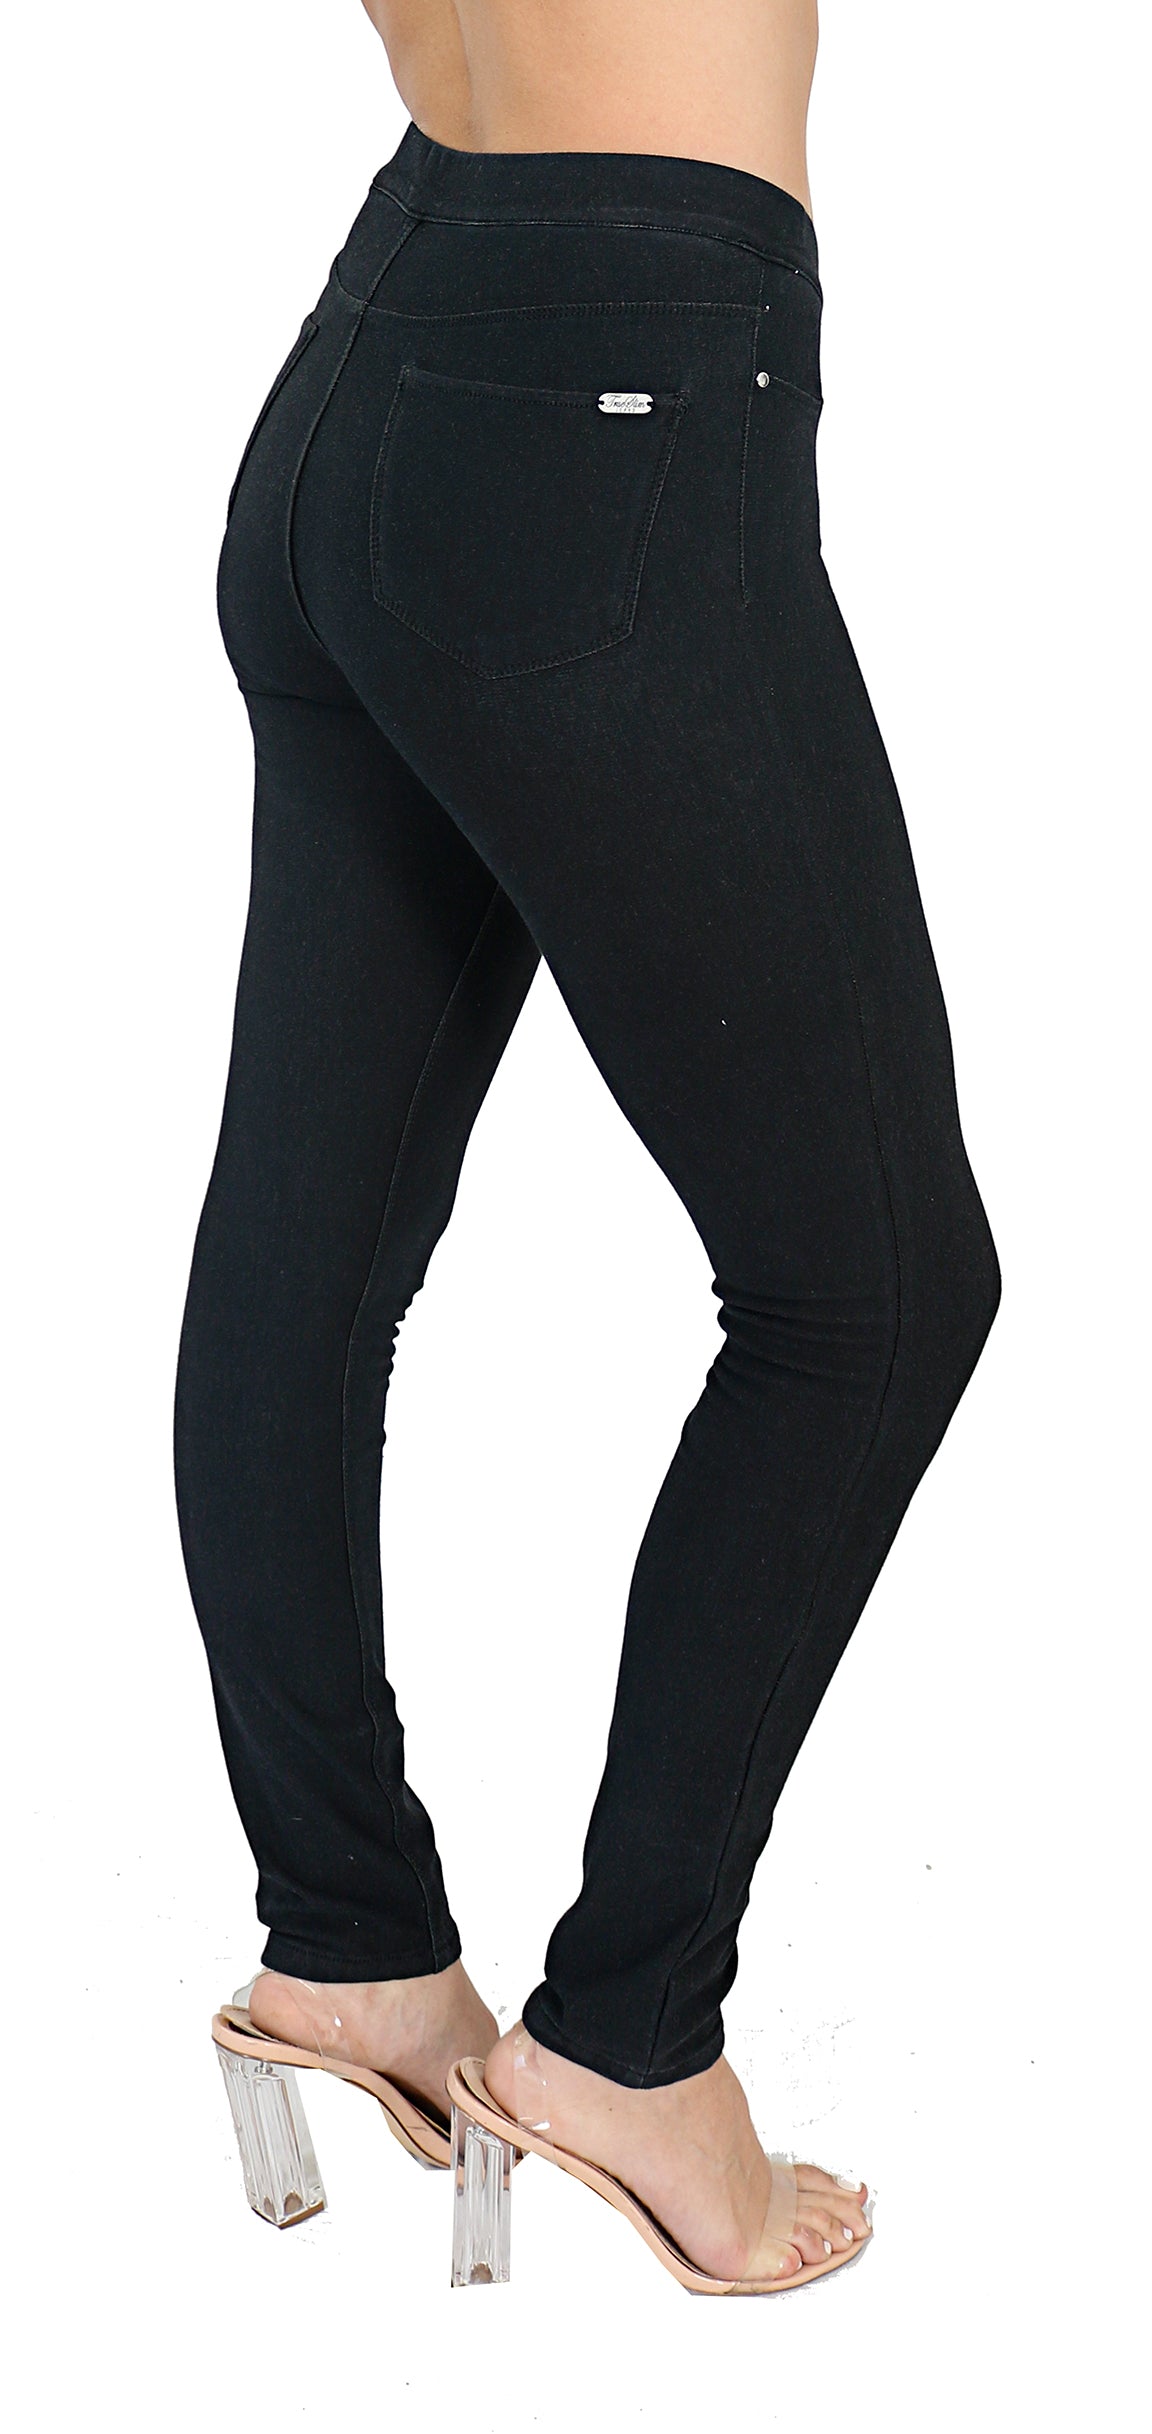 Black French Jeans Leggings TrueSlim™ – TrueSlim Premium Terry